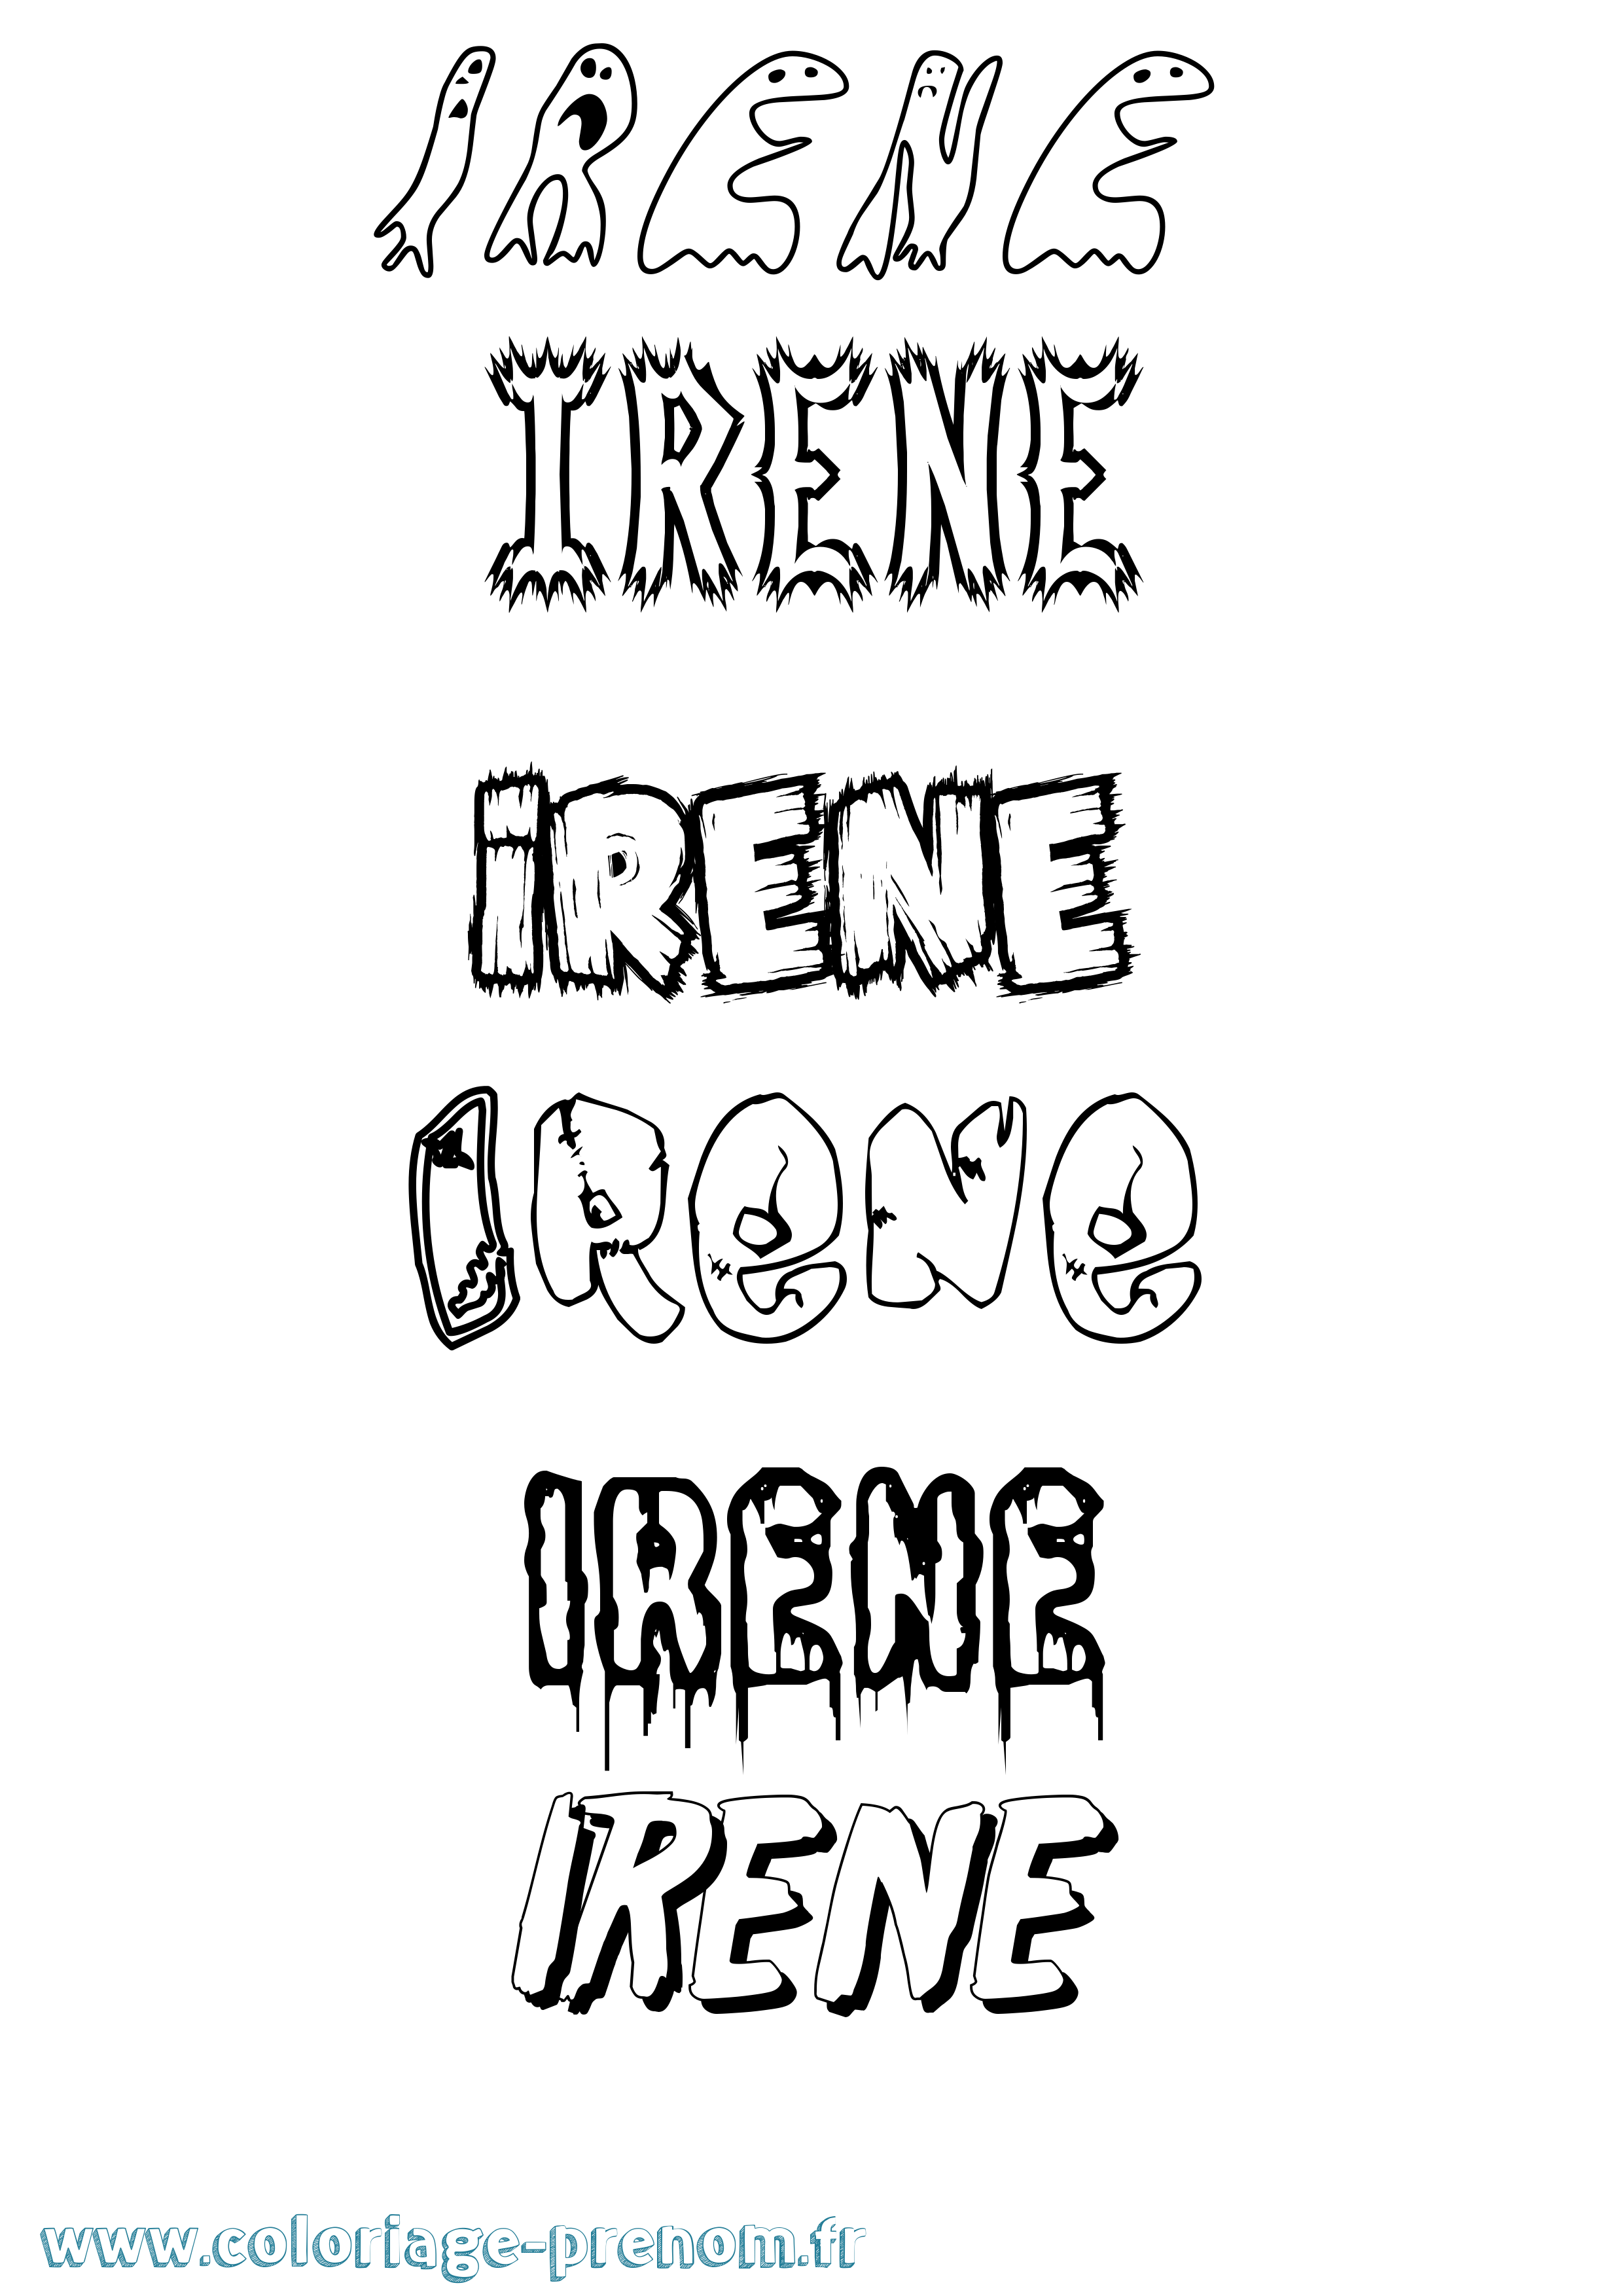 Coloriage prénom Irene Frisson